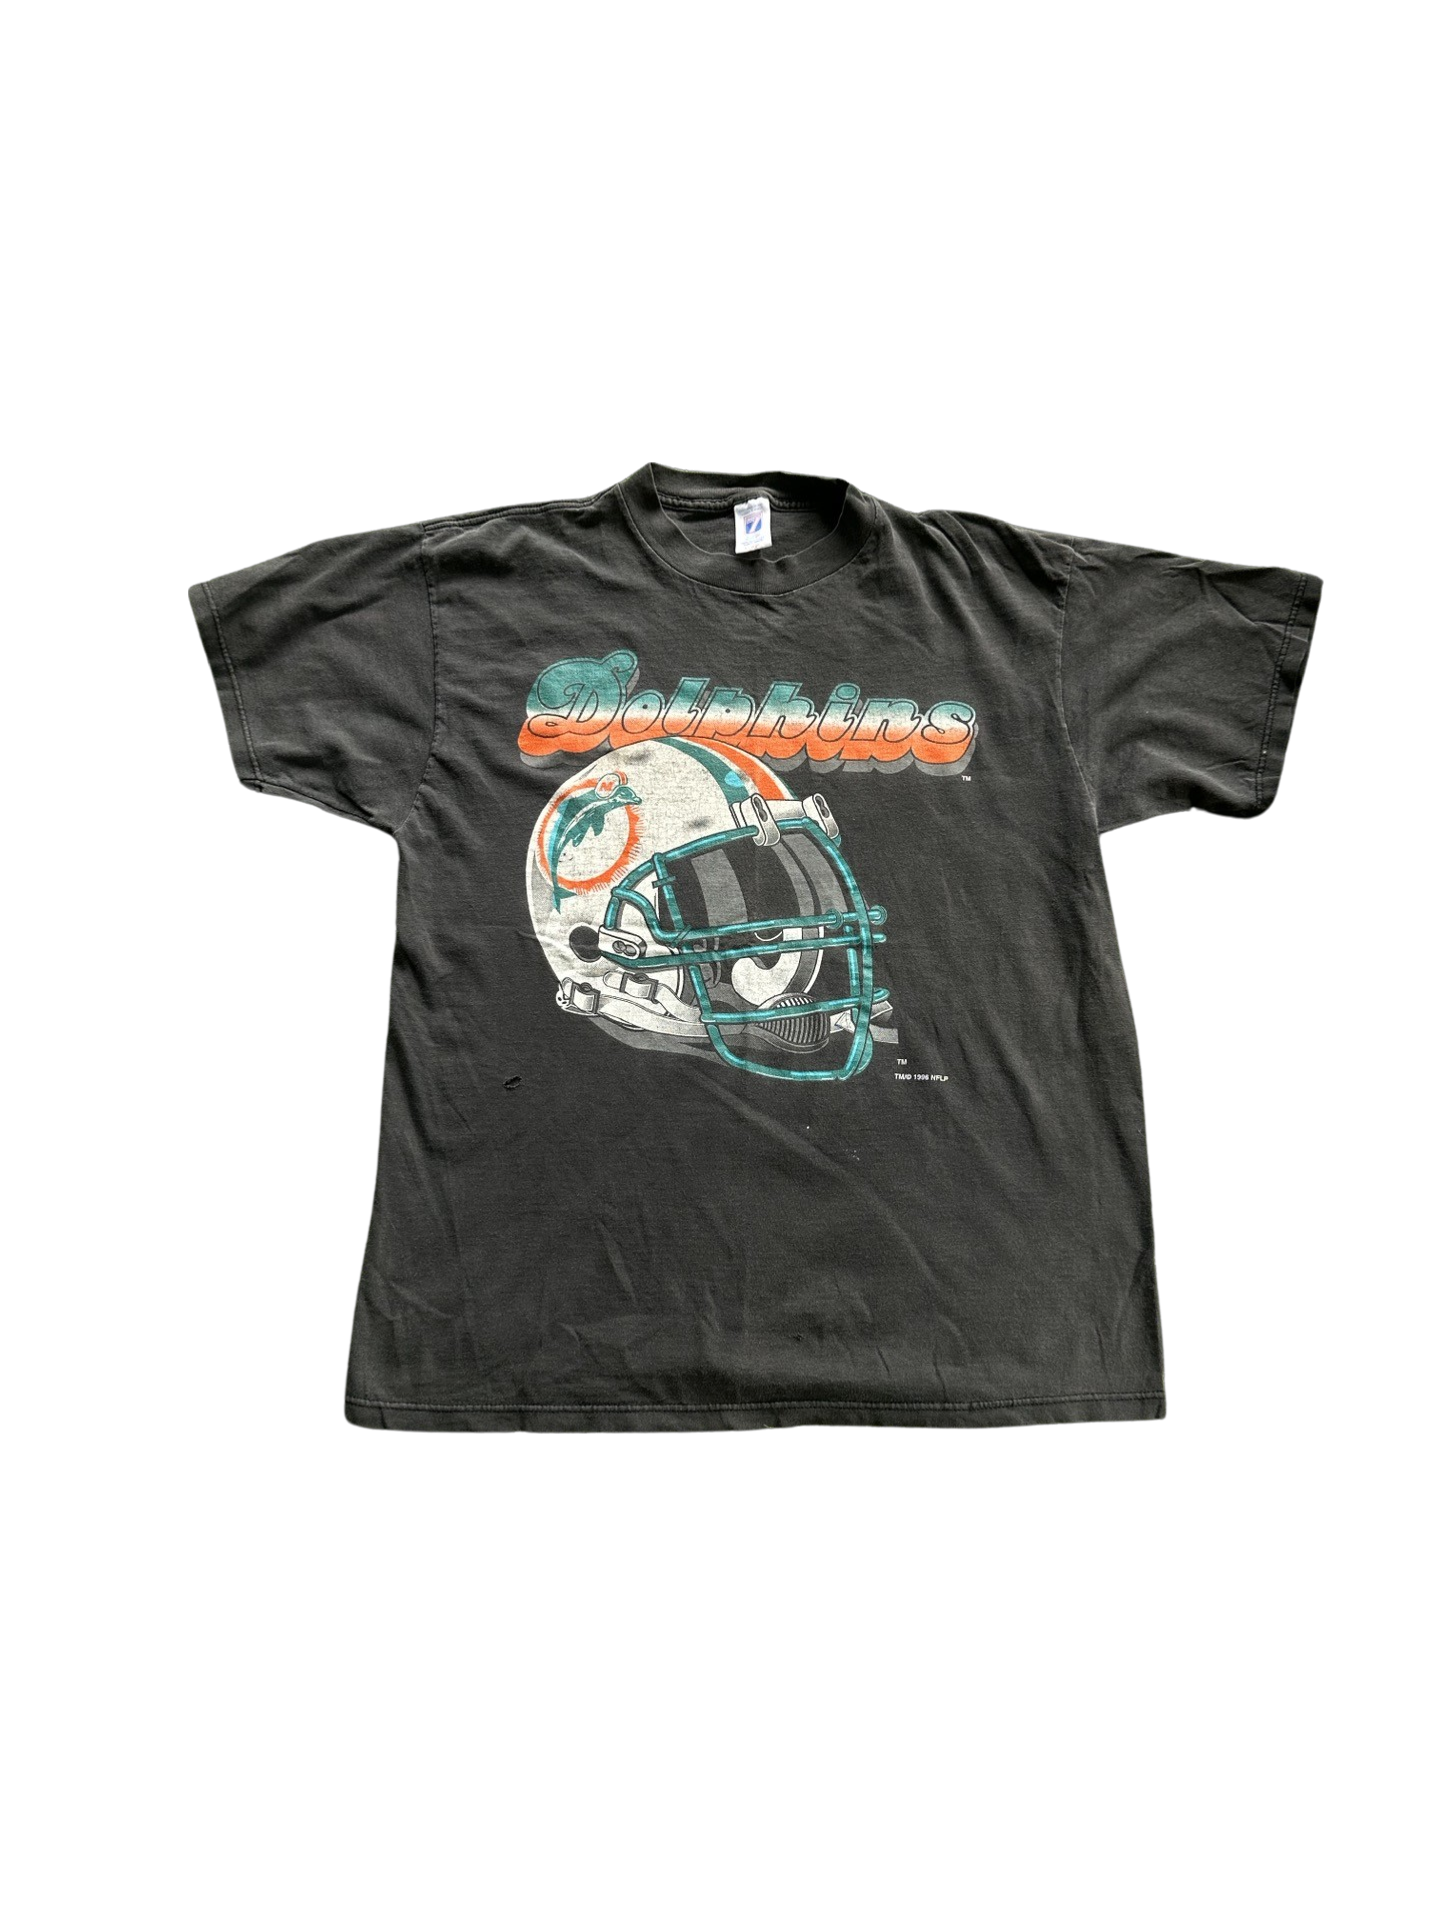 Vintage 1996 Miami Dolphins T-shirt